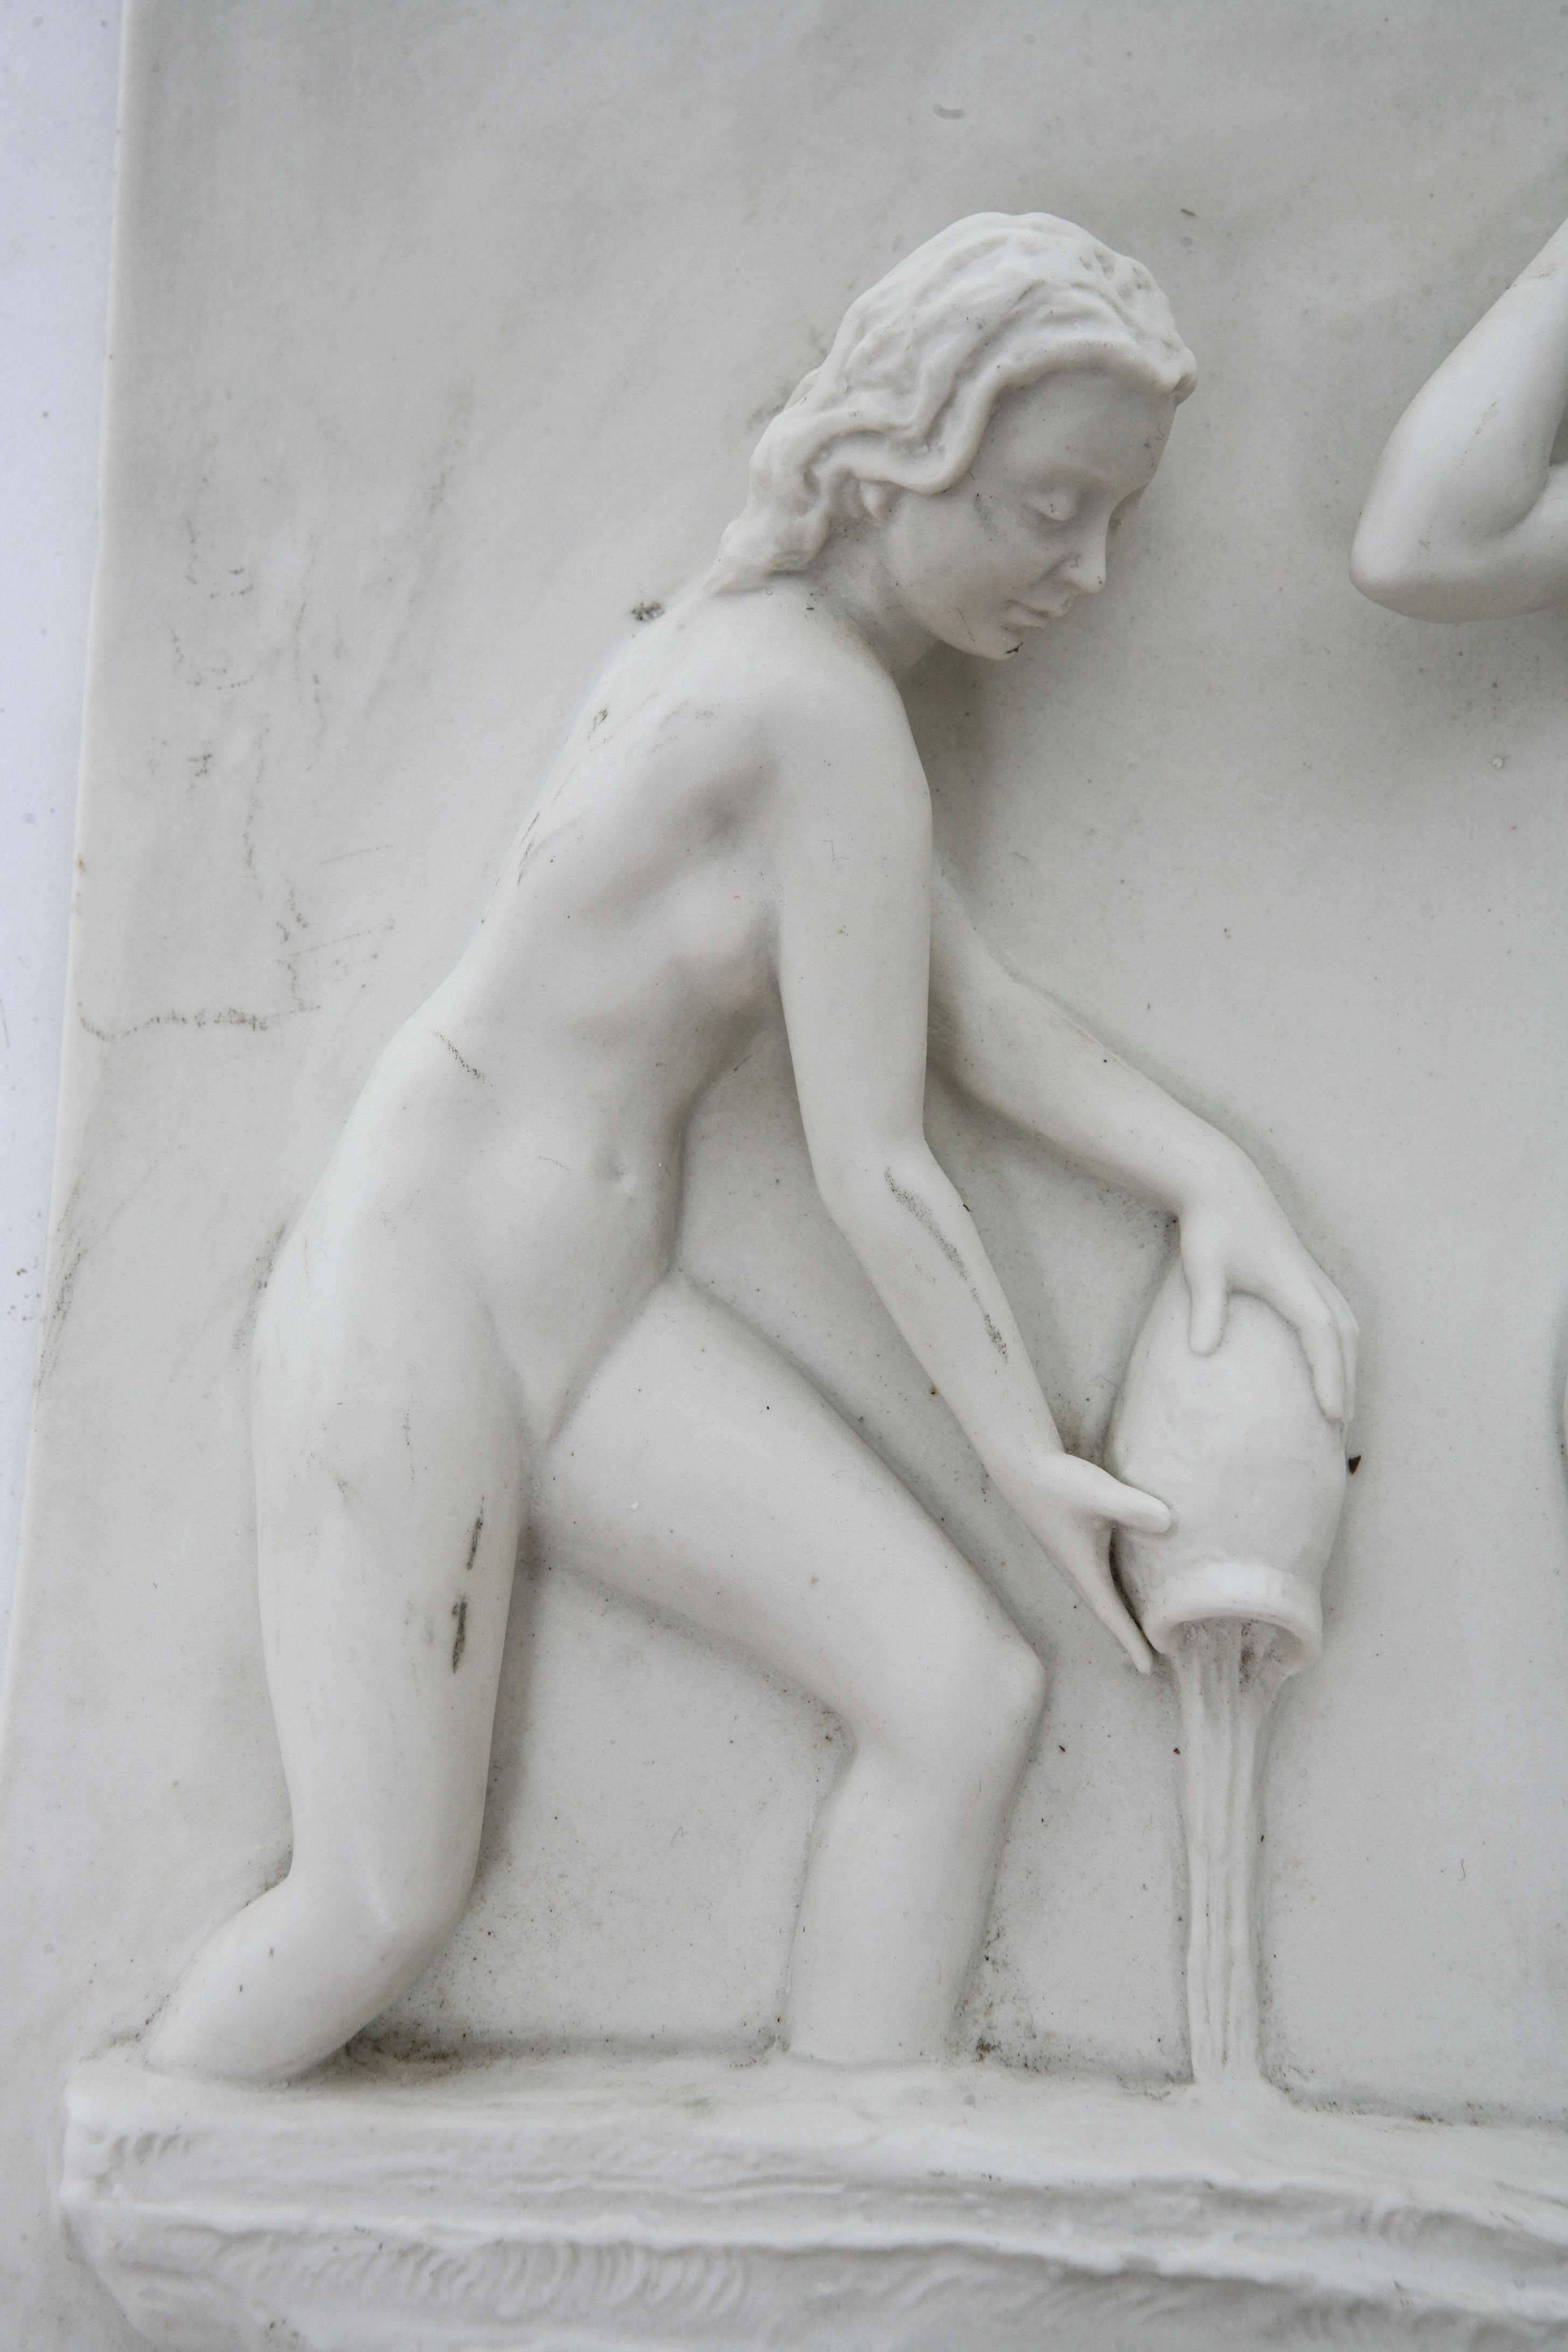 20th Century Vintage Art Deco German Carl Werner Bisque Sculptural Female Nudes Plaque